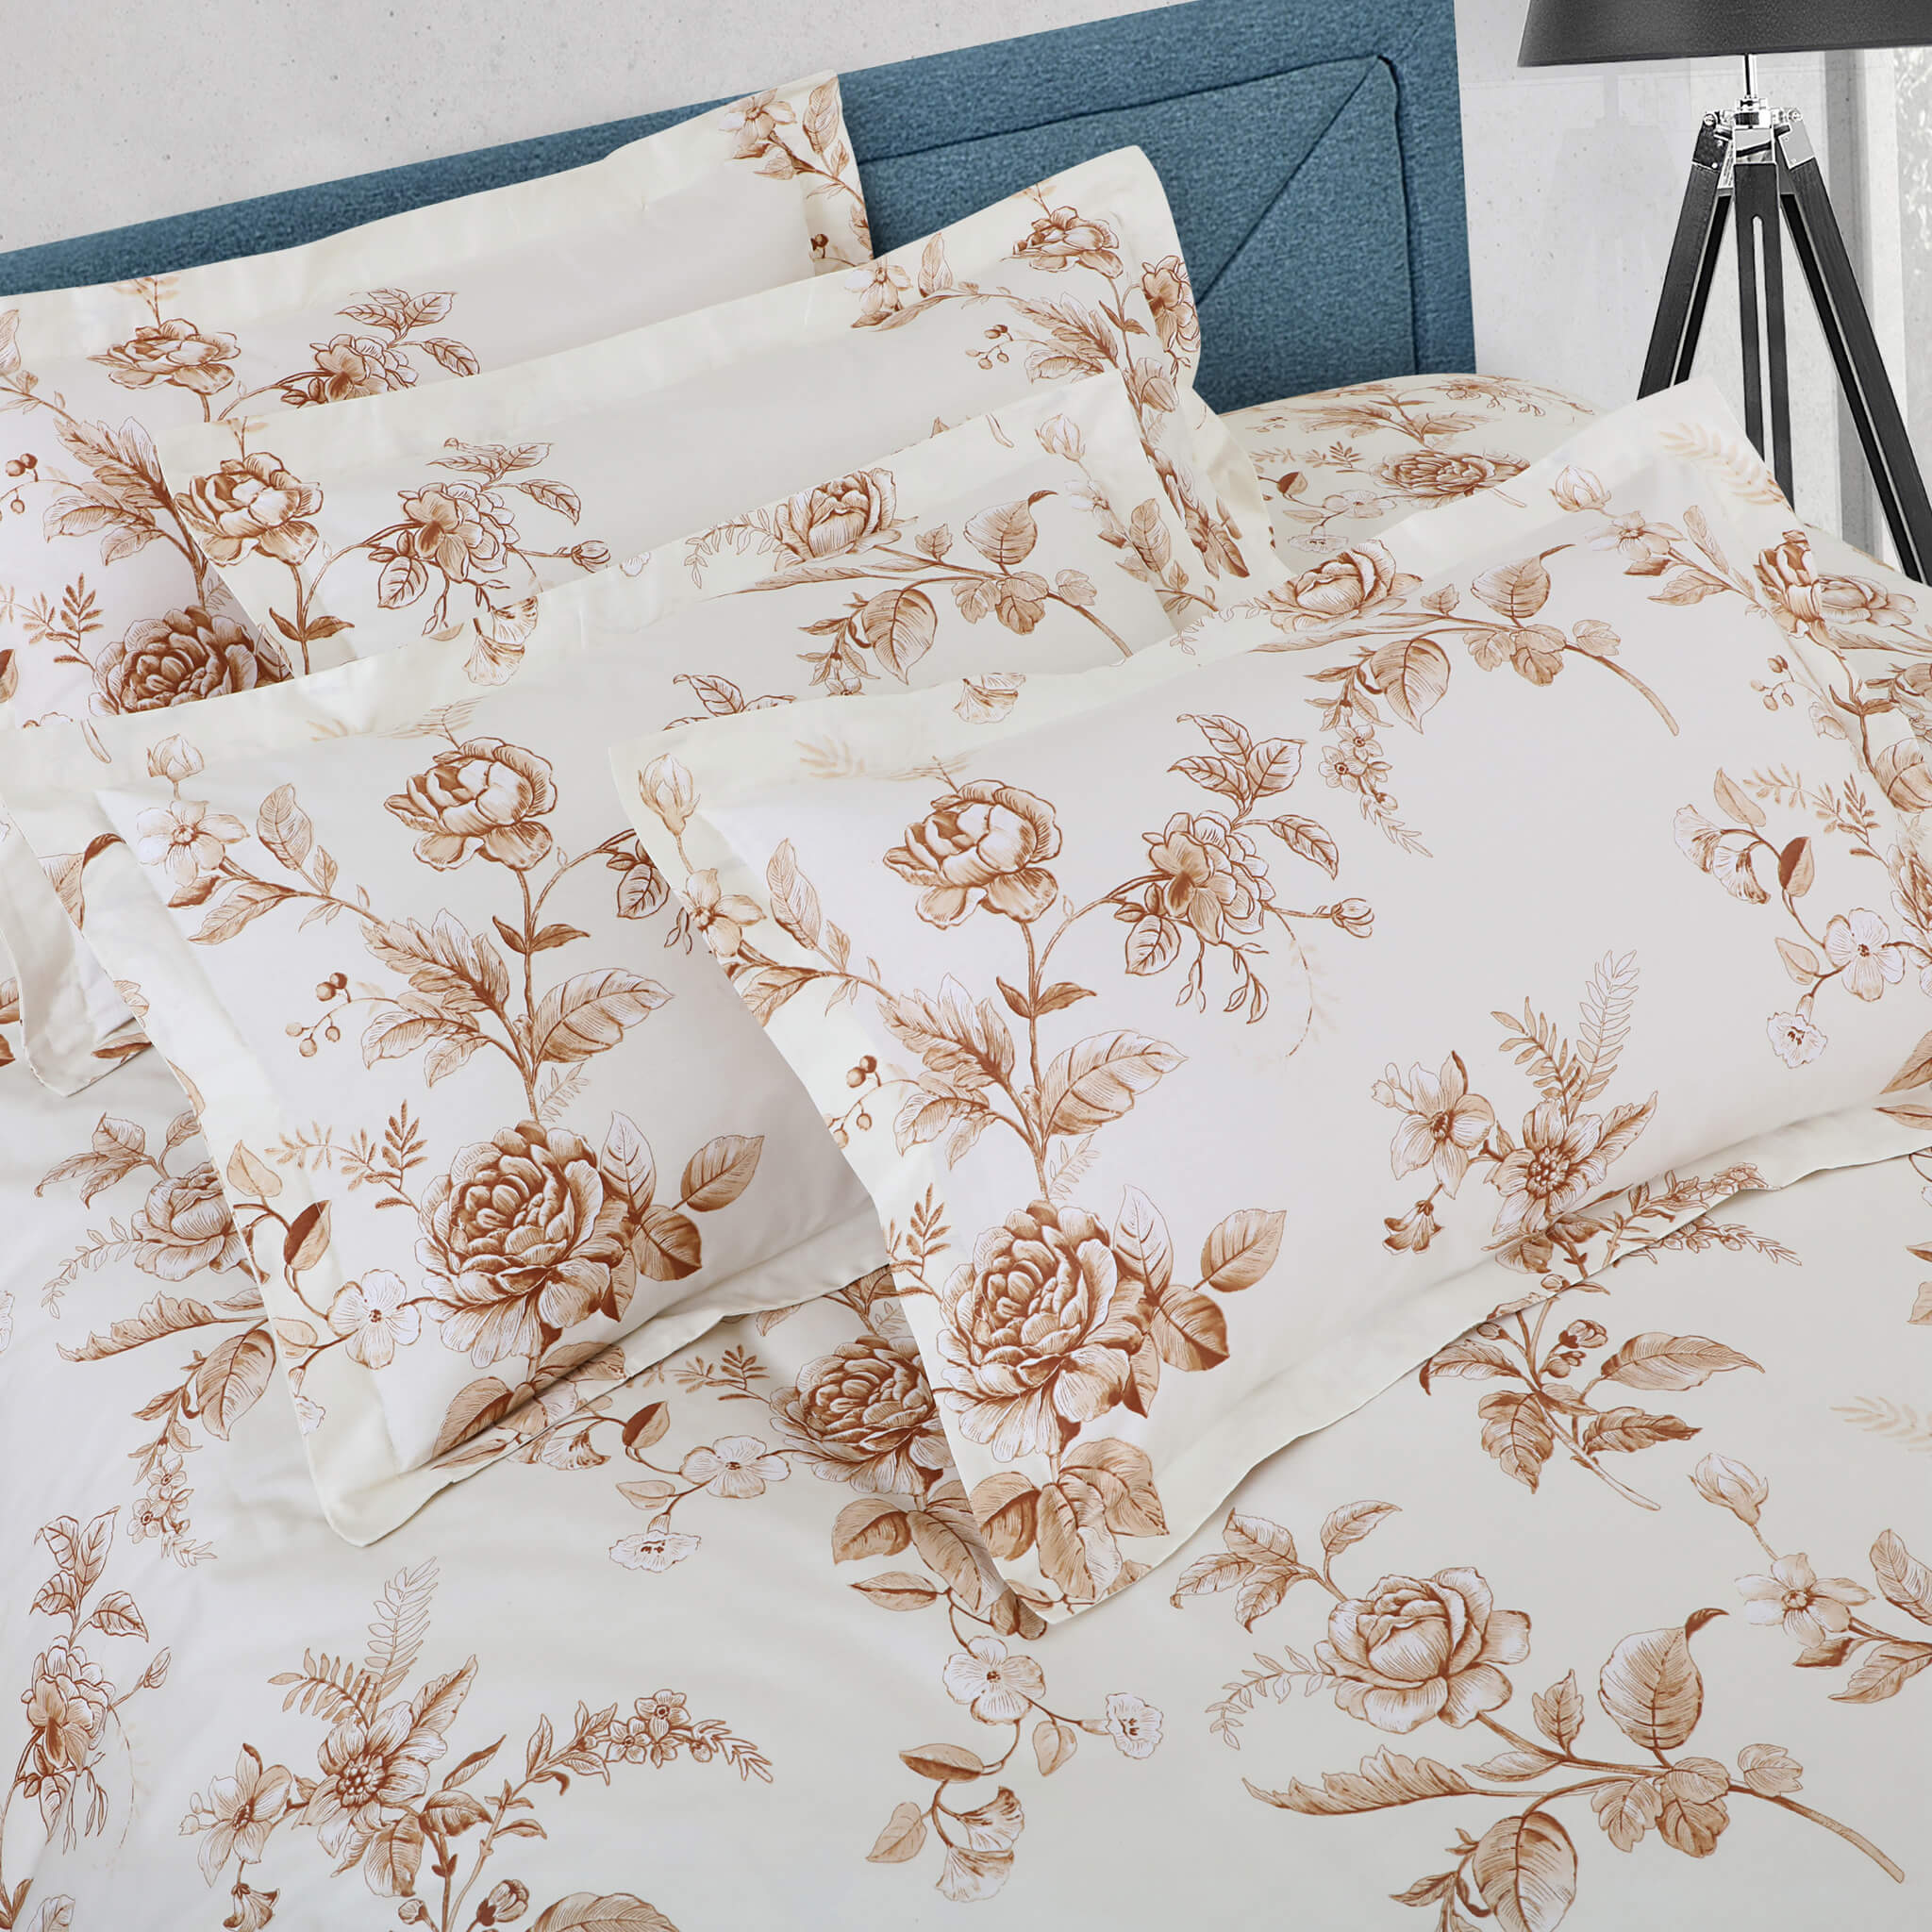 Malako Royale XL White Botanic 100% Cotton King Size Bed Sheet/Bedding Set - MALAKO